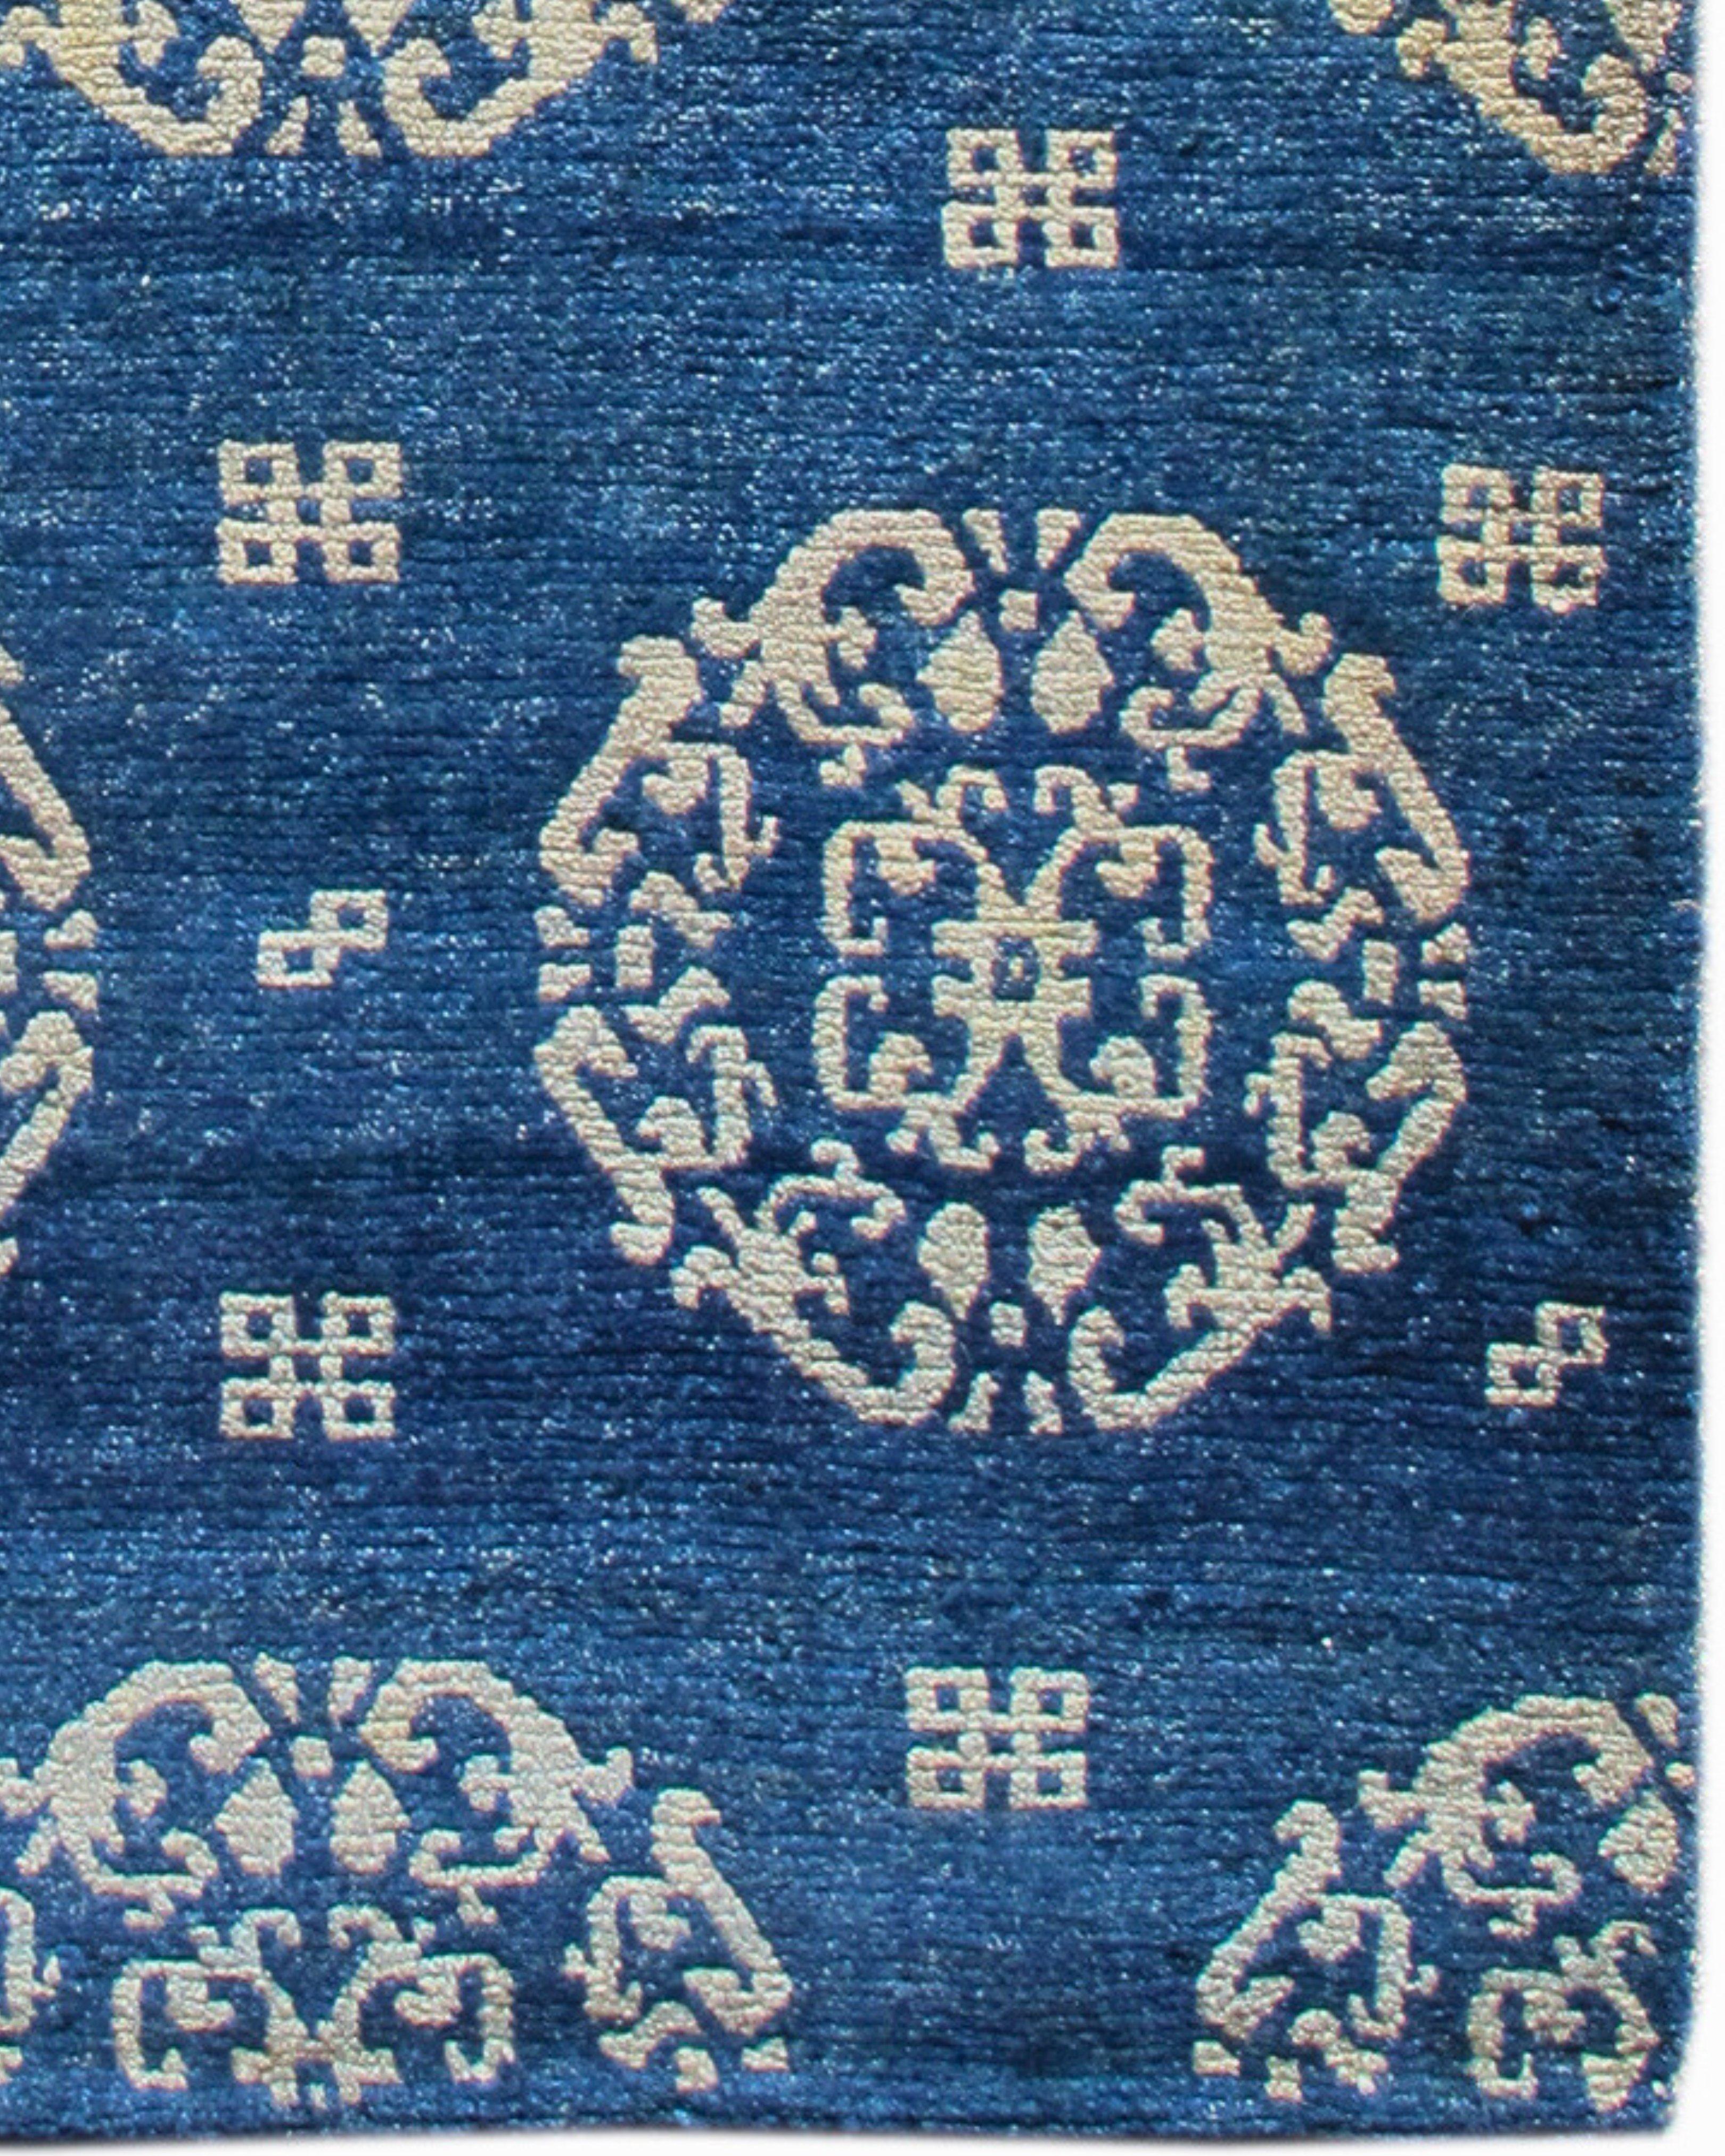 Antique Blue-Indigo Tibetan Khaden Rug with Peonies, Late 19th Century For Sale 1